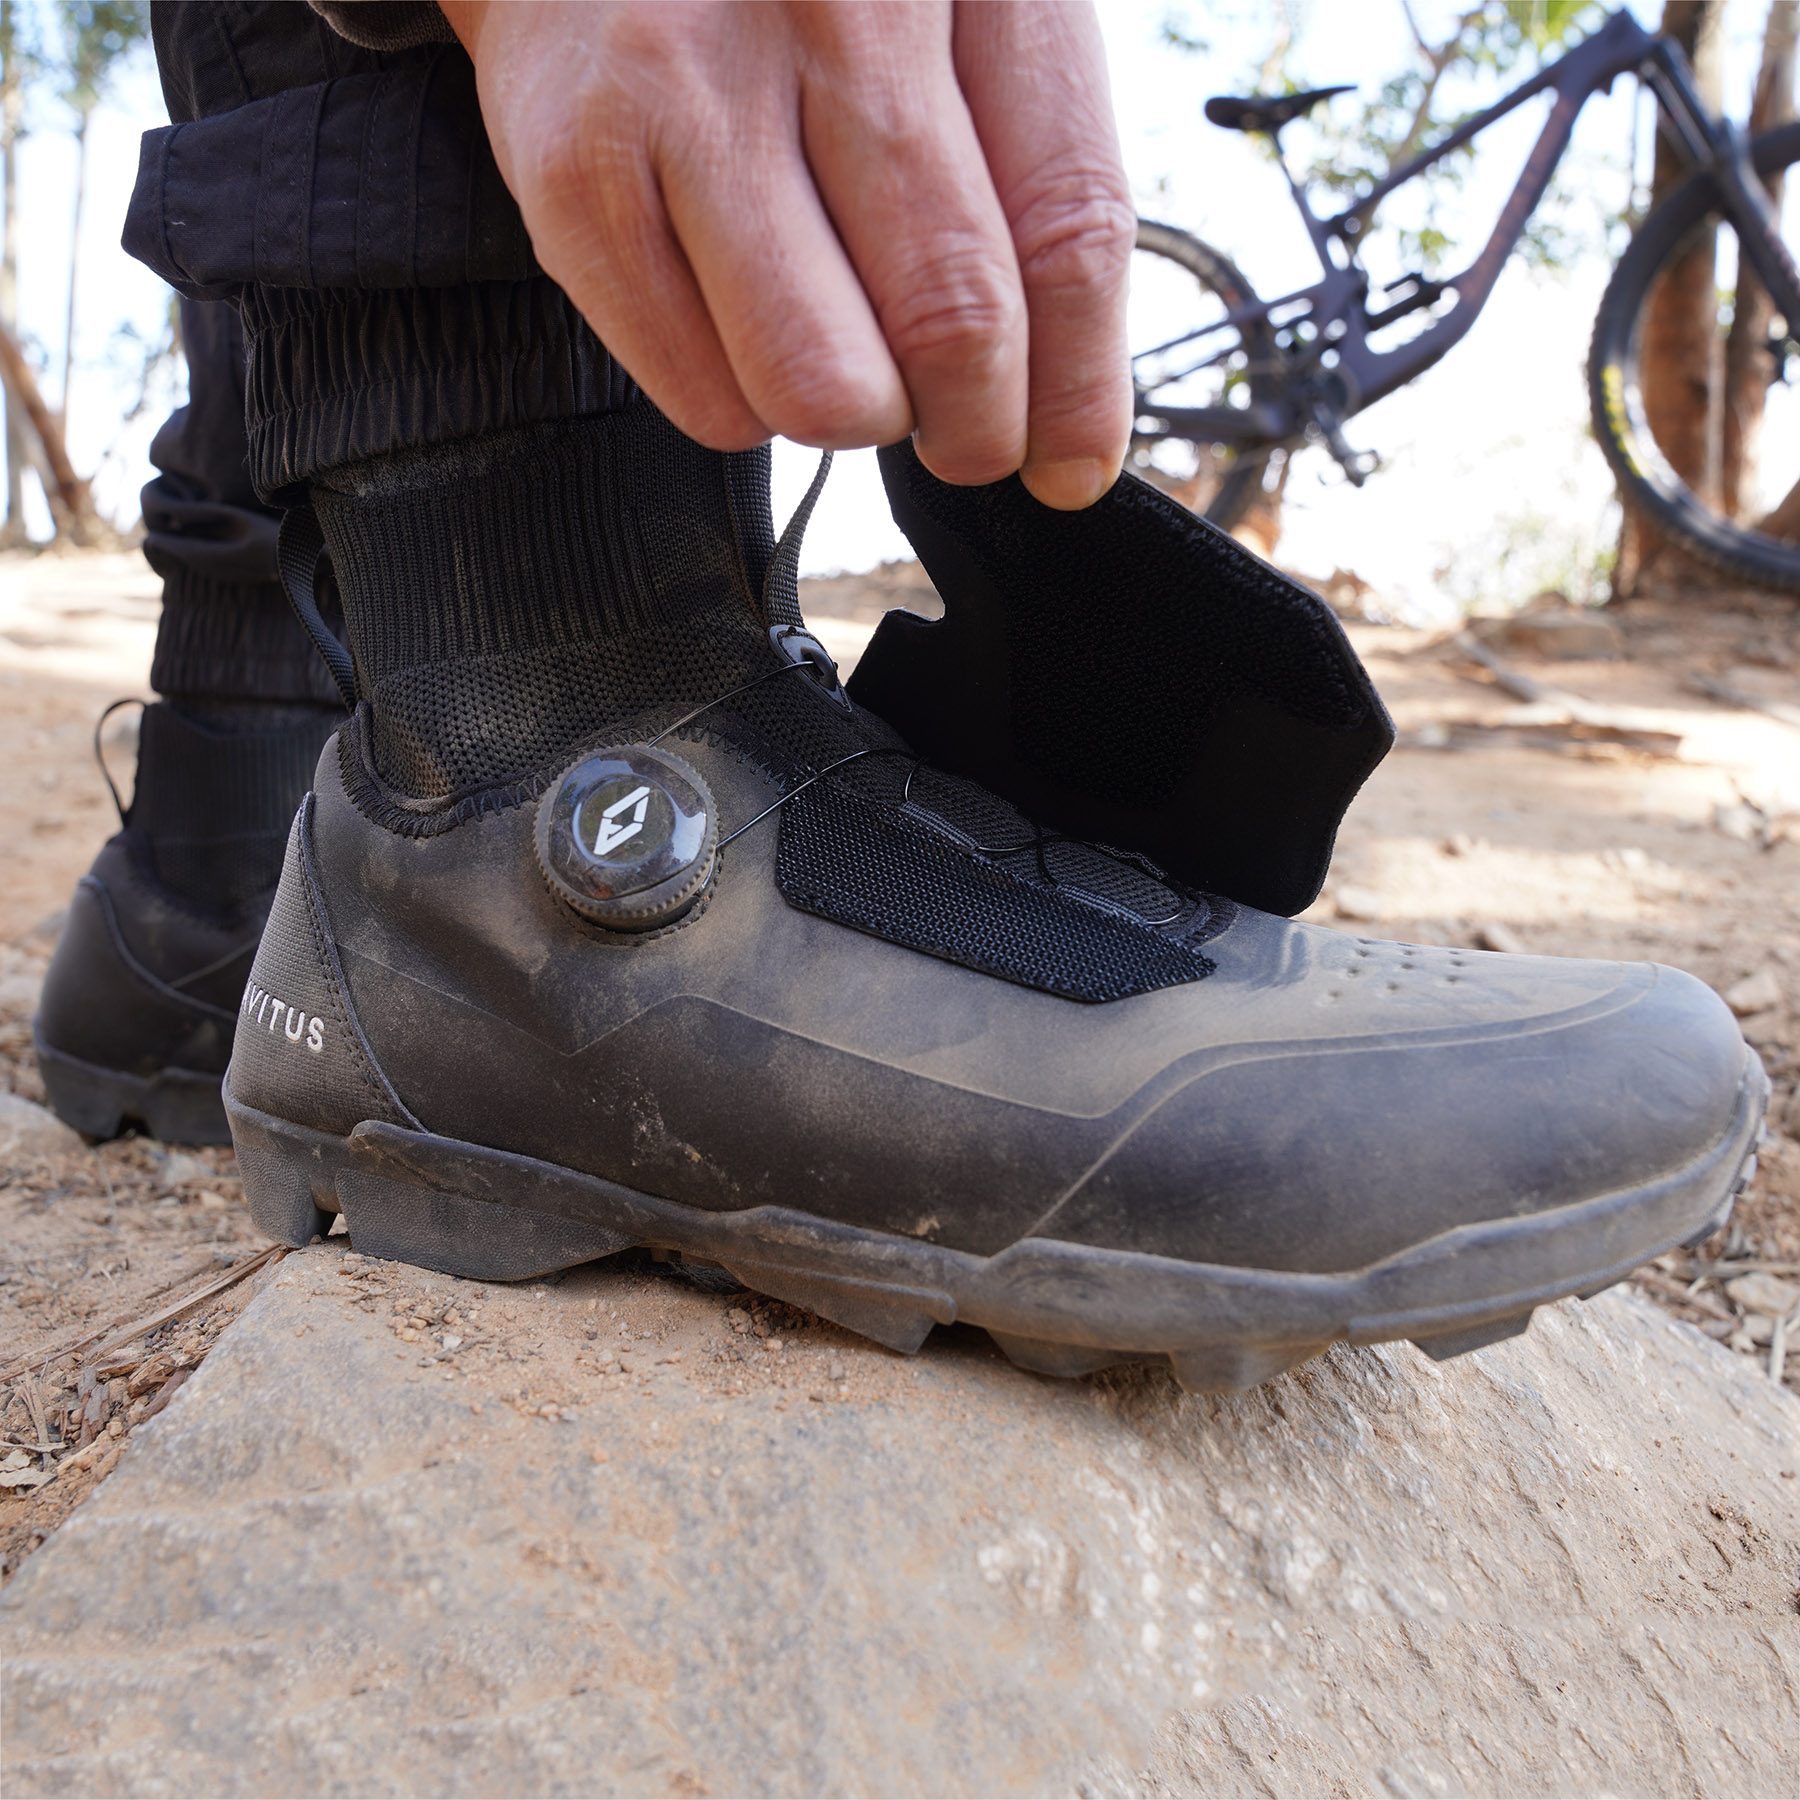 Avitus vinter mtb sko til mountainbike cykelsko med spd klamper kompatibel